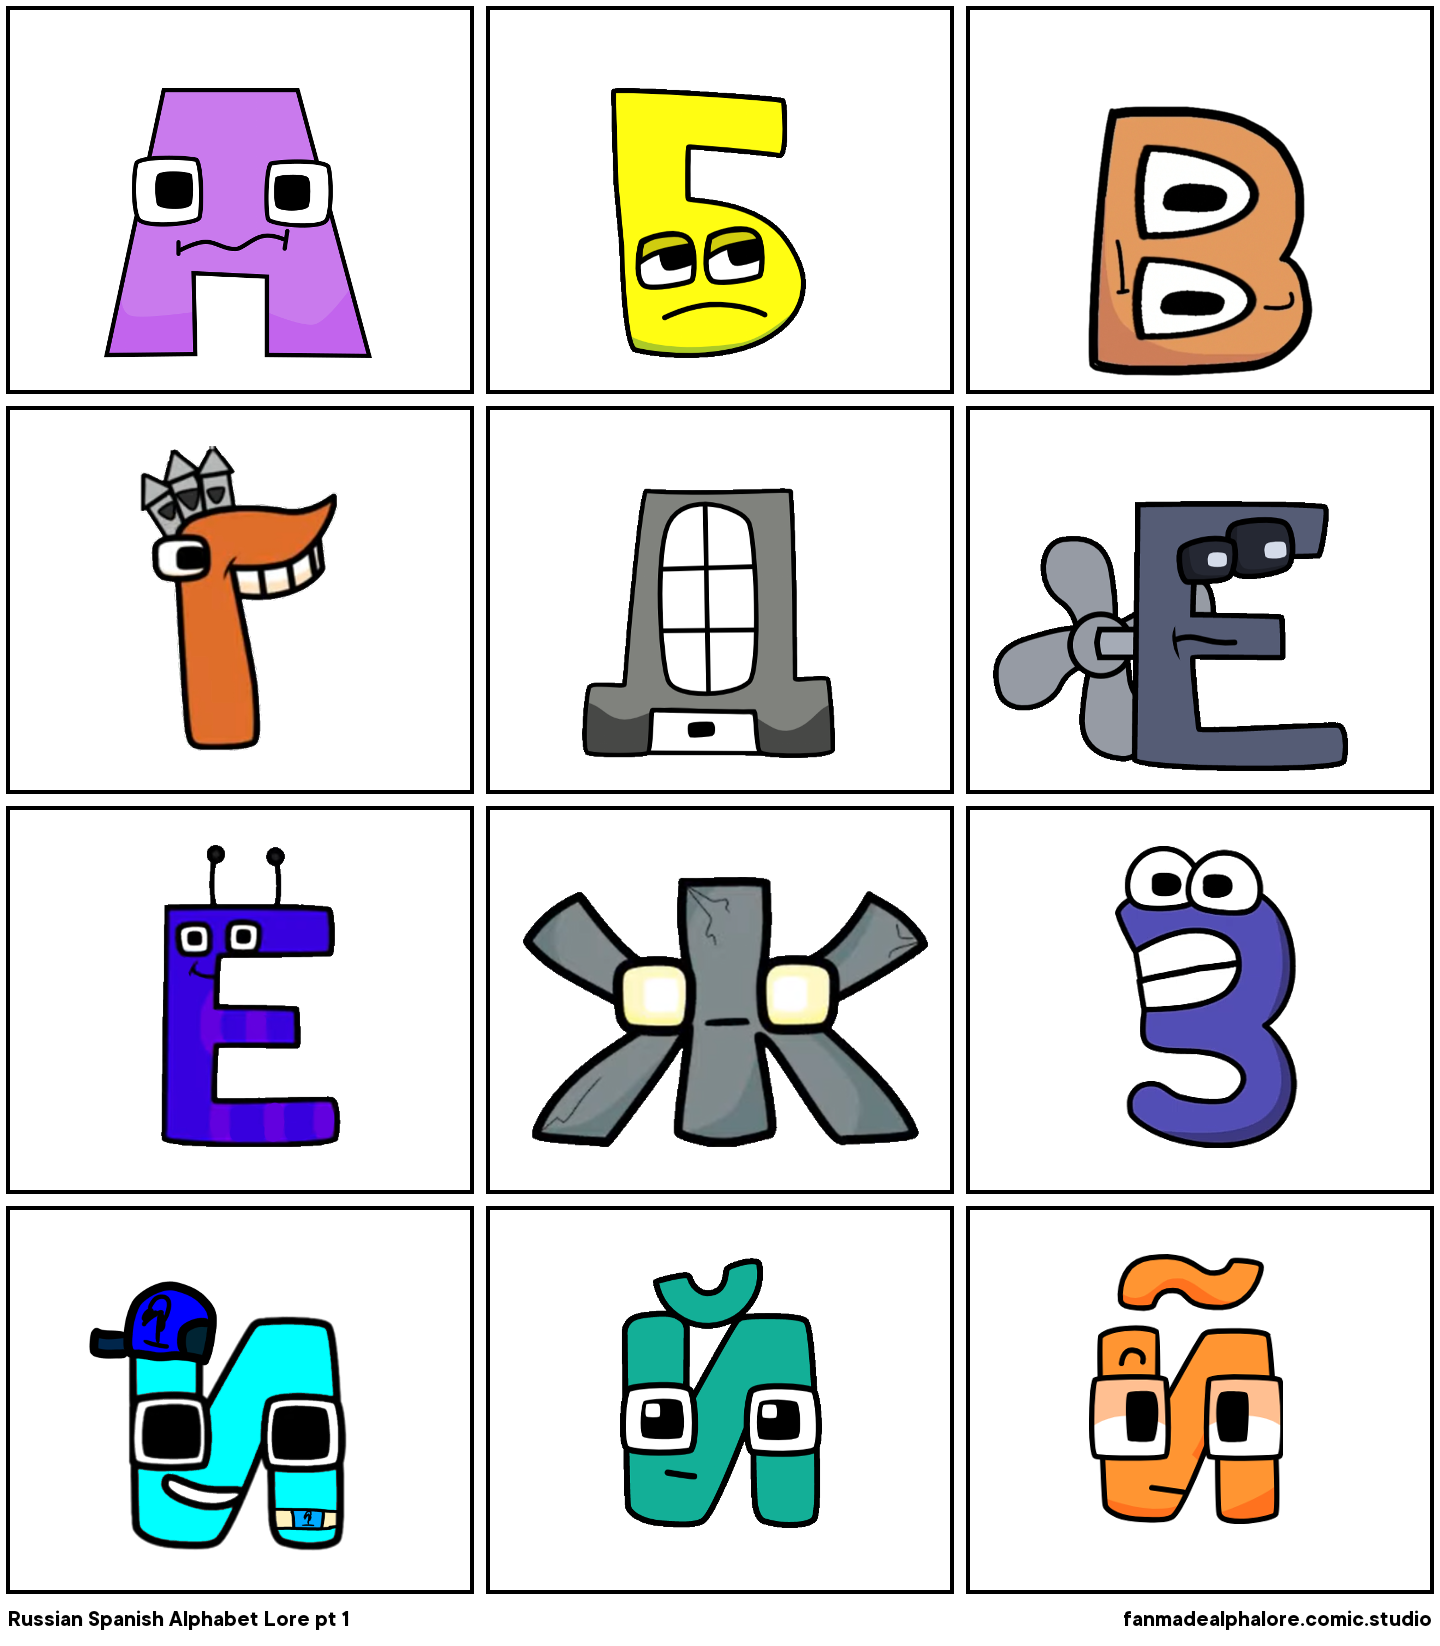 Russian Alphabet Lore P (П) vs Spanish Alphabet Lore P vs Original Alphabet  Lore P